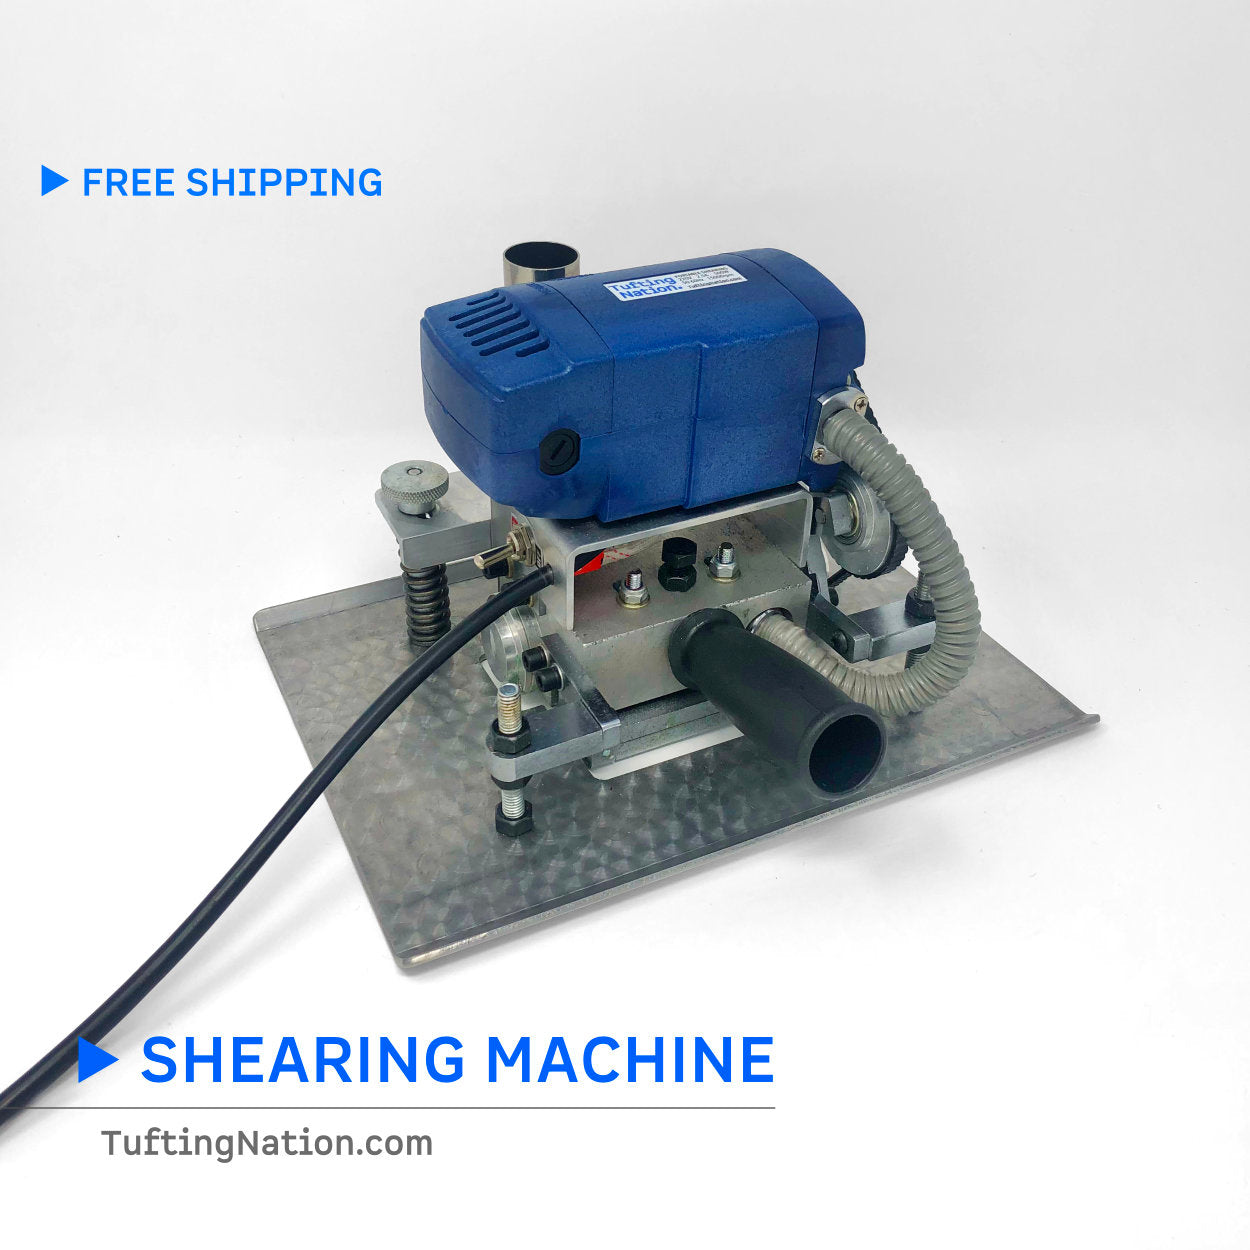 Flat Shearing Machine for carpet making | TuftingNation